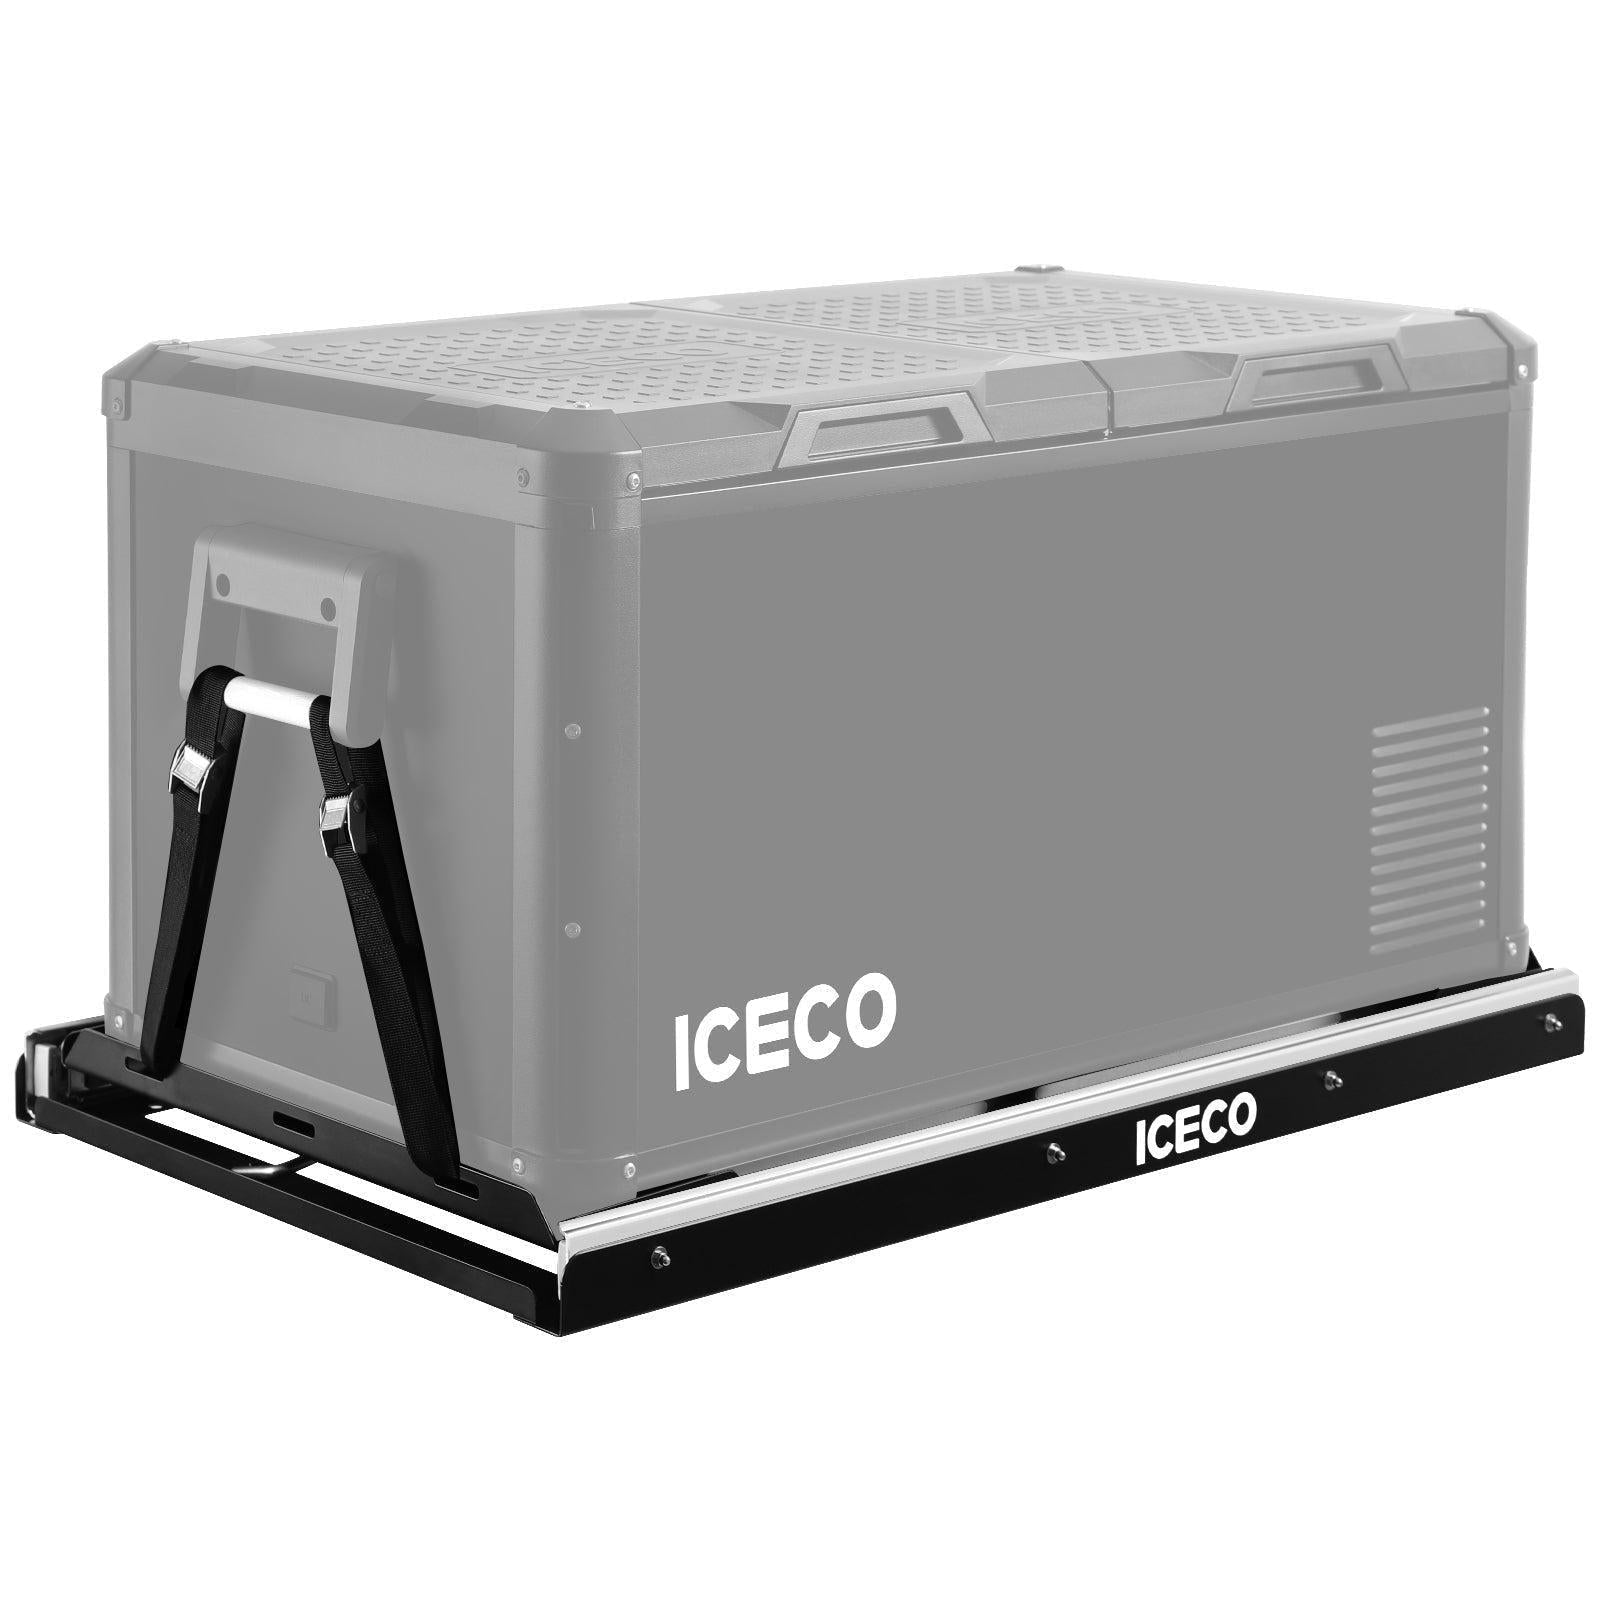 Slide Mount For VL75ProD 12V Refrigerator | ICECO - www.icecofreezer.com